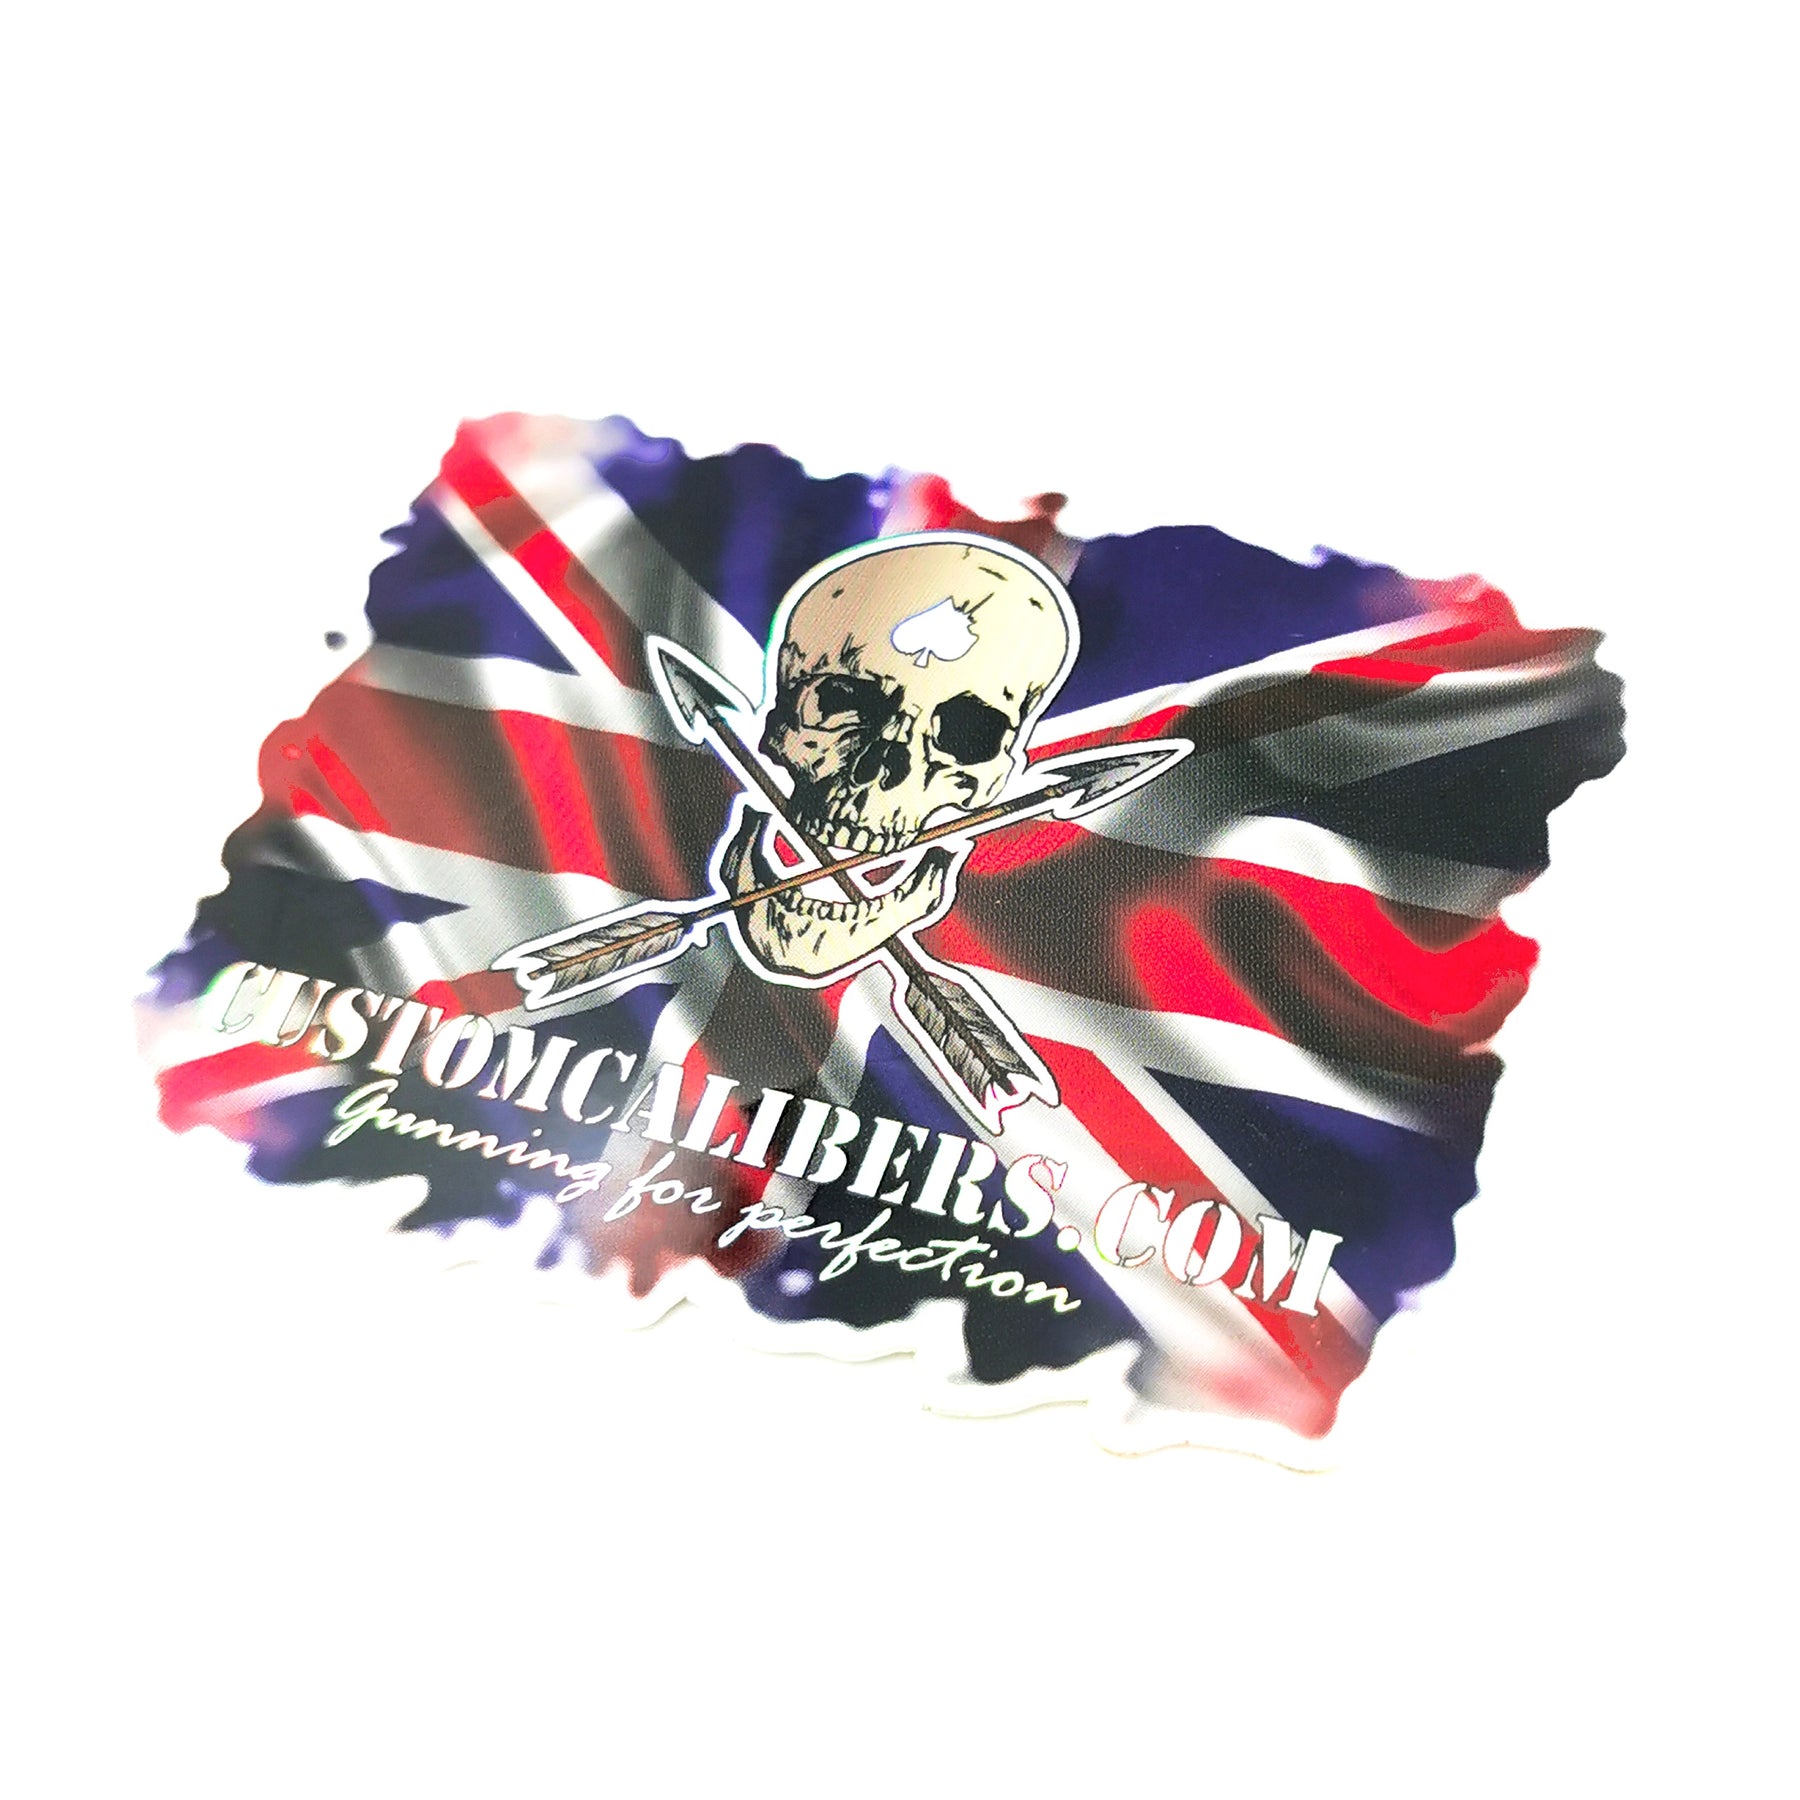 Union Jack Skull sticker